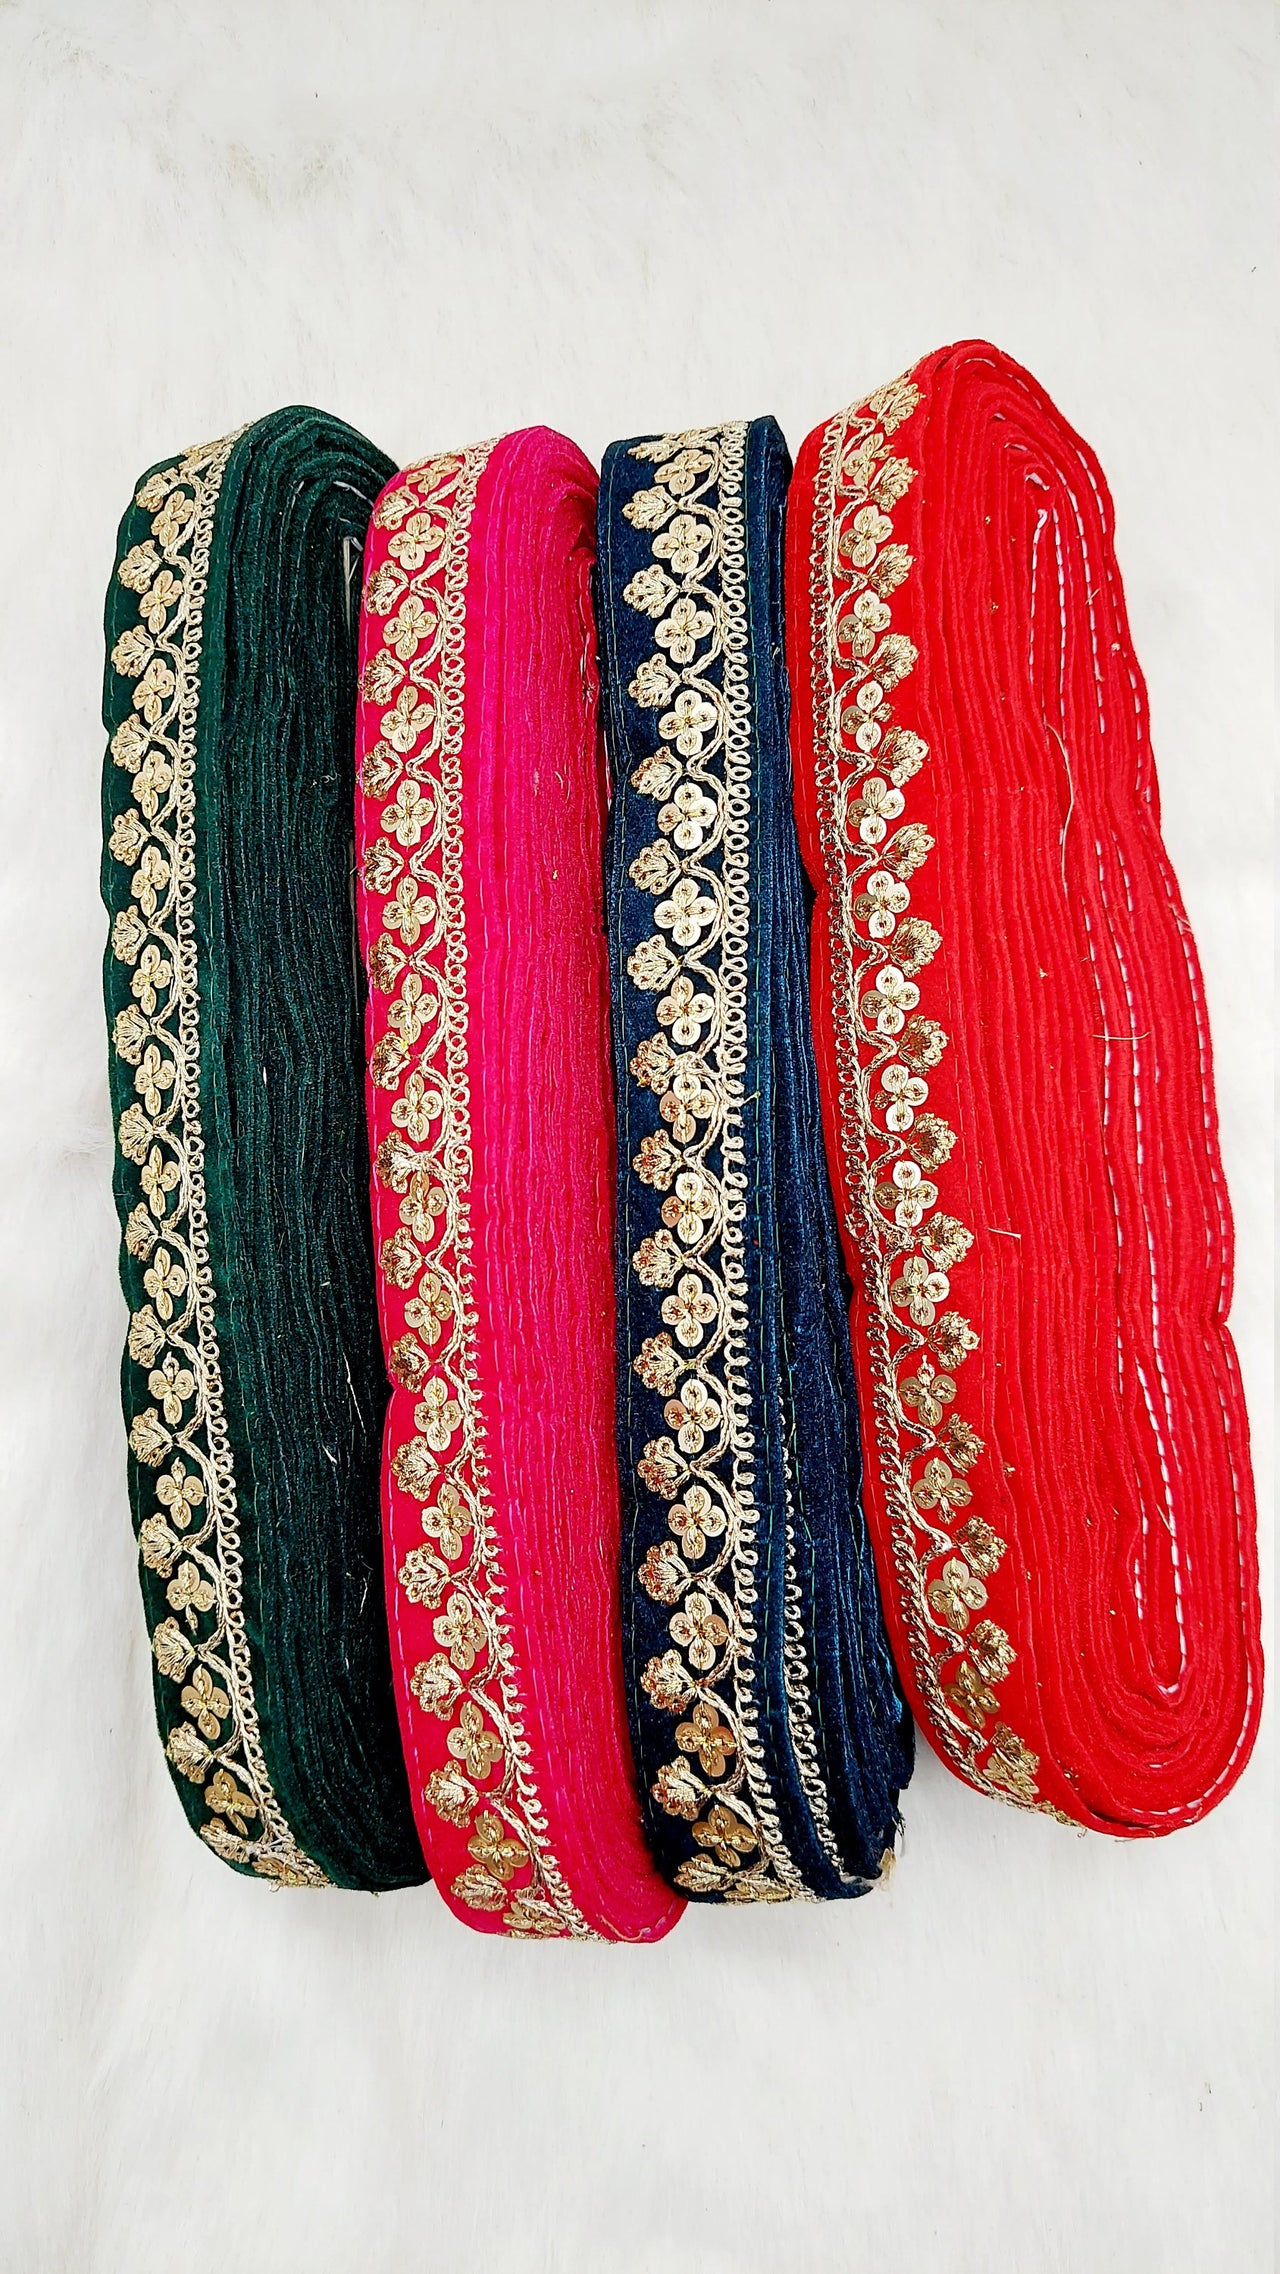 Floral Sequins Embroidered Velvet Fabric Trim Indian Sari Border, Sequin Trimming, Trim By 3 Yards